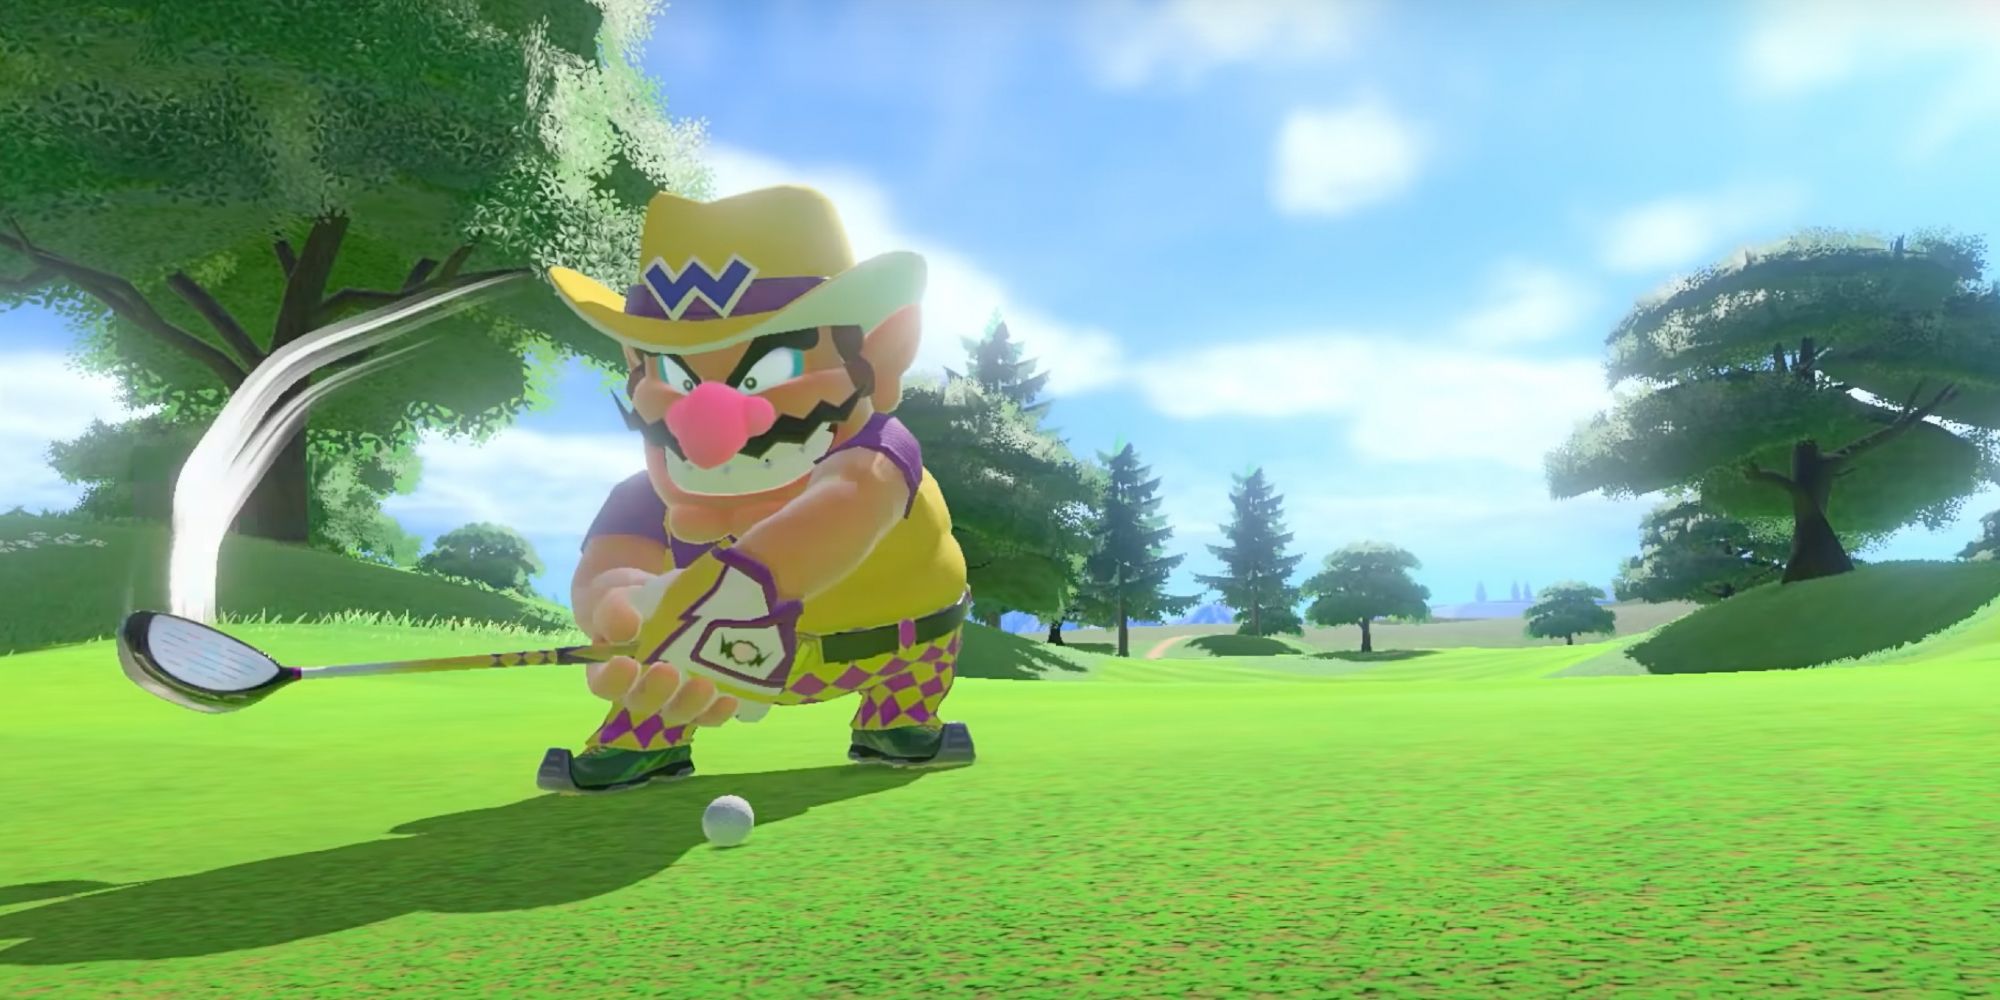 Wario teeing off in Mario Golf: Super Rush